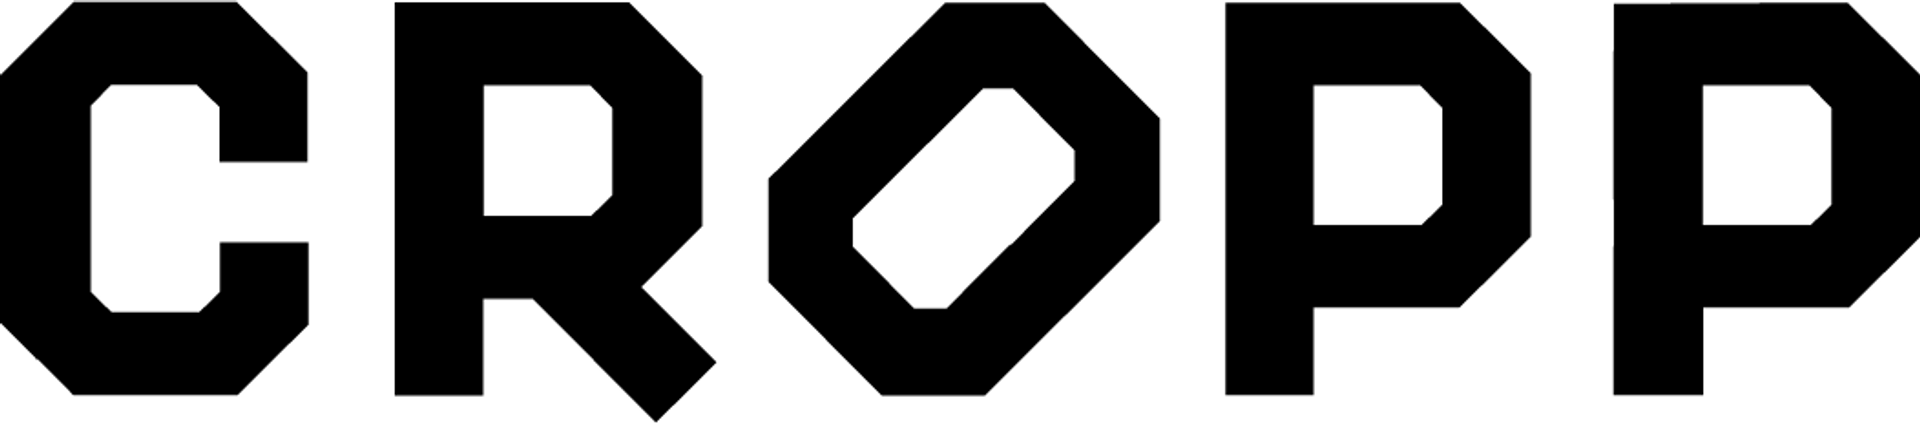 CROPP logo of current catalogue